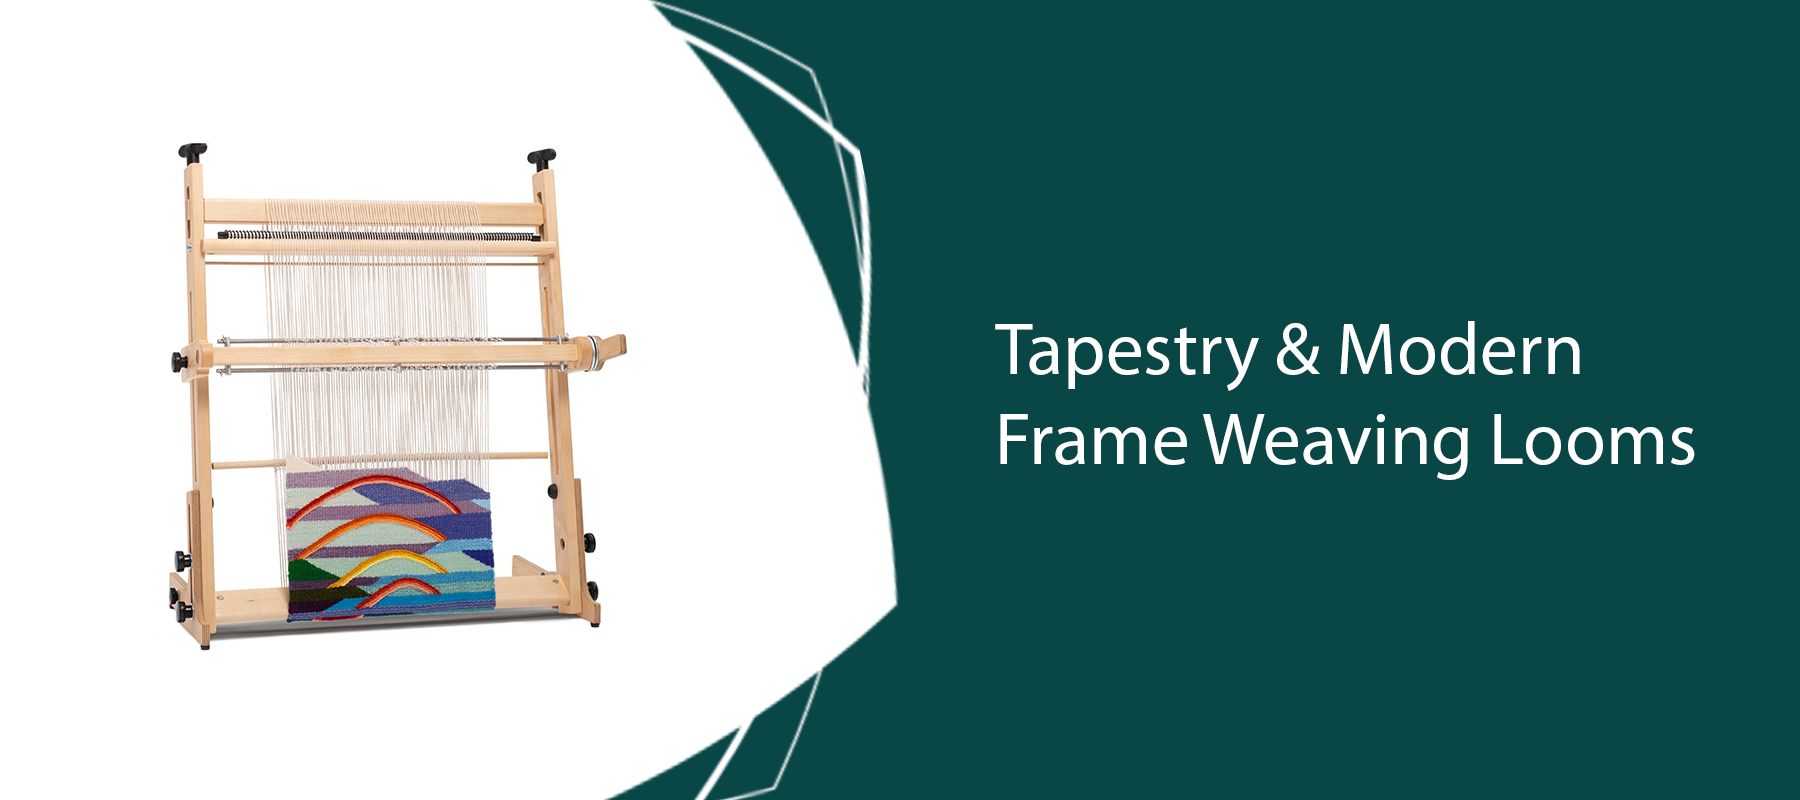 Tapestry & Modern Frame Weaving Looms - Creating Art